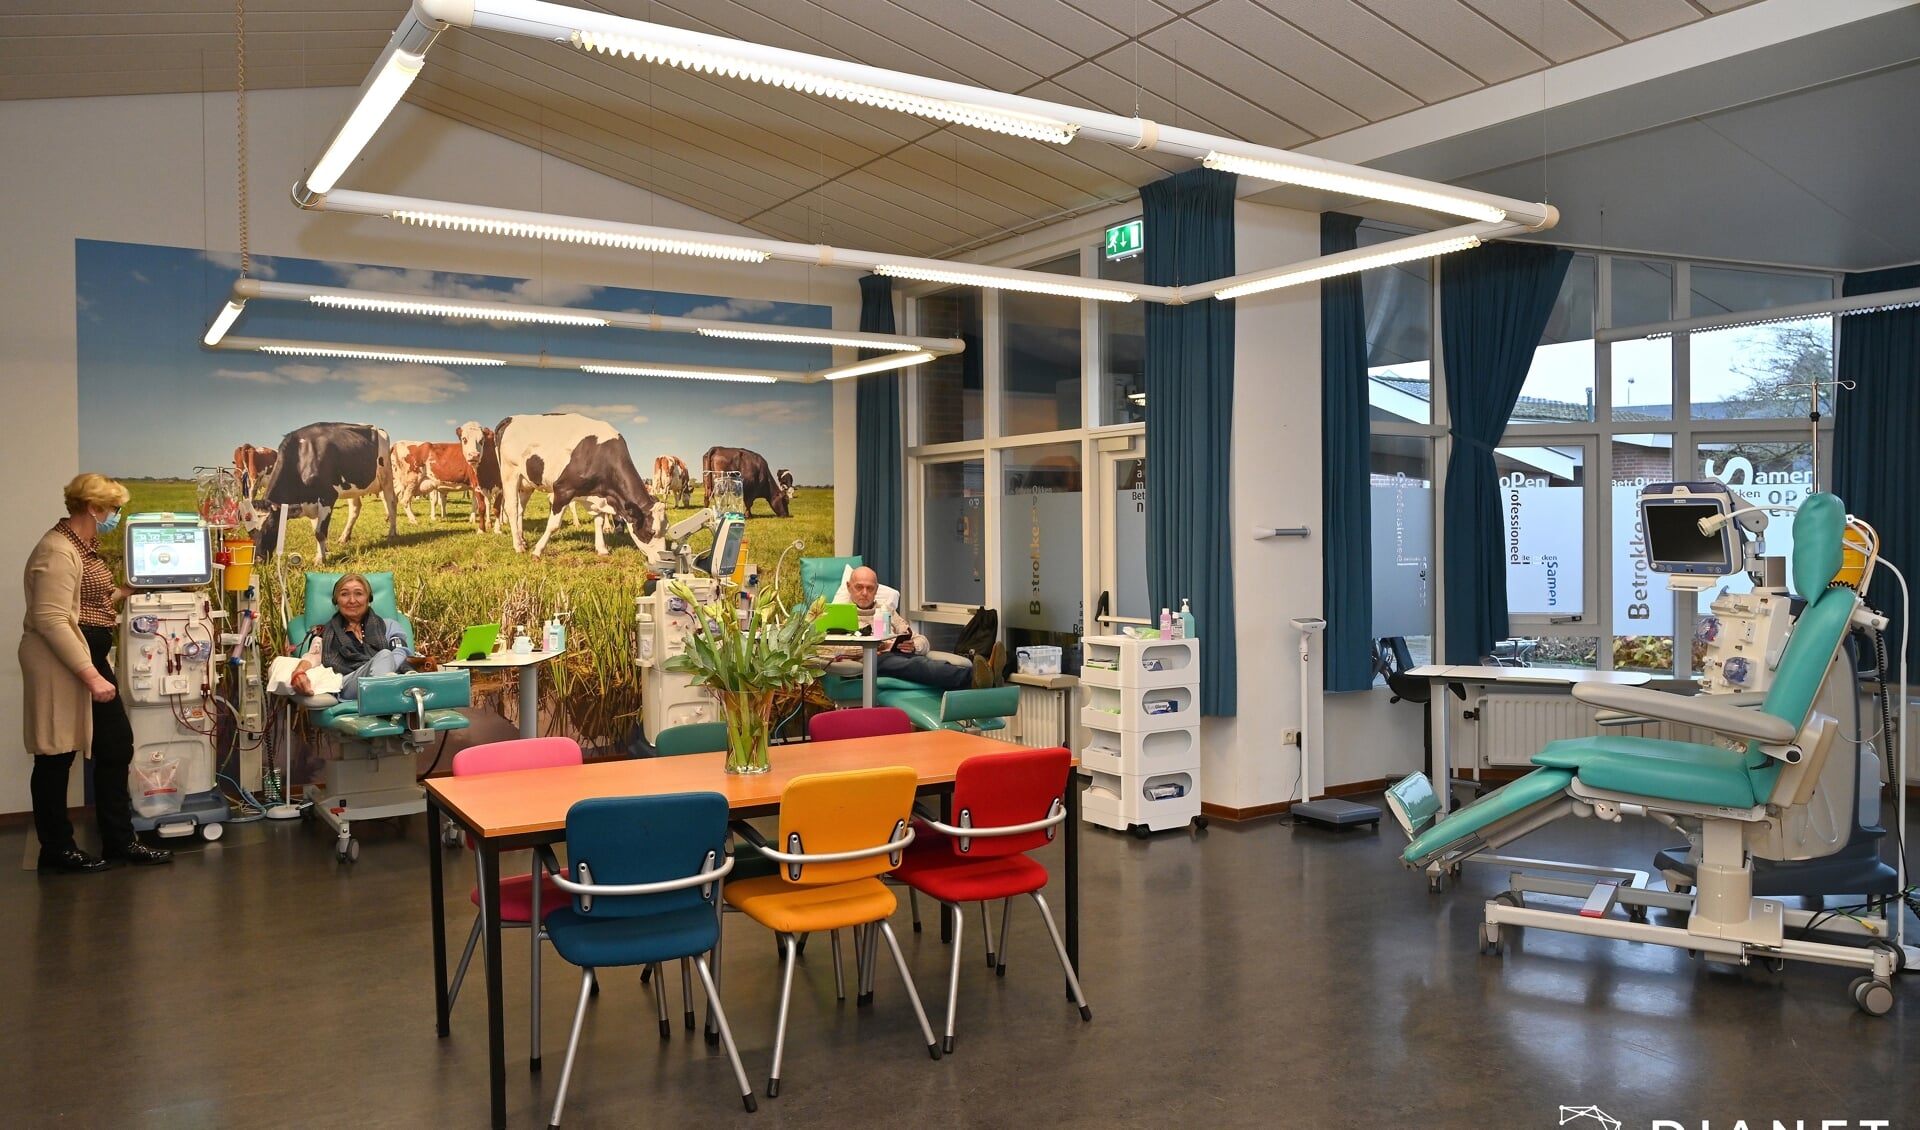 Dialysecentrum Dianet in Boxmeer.